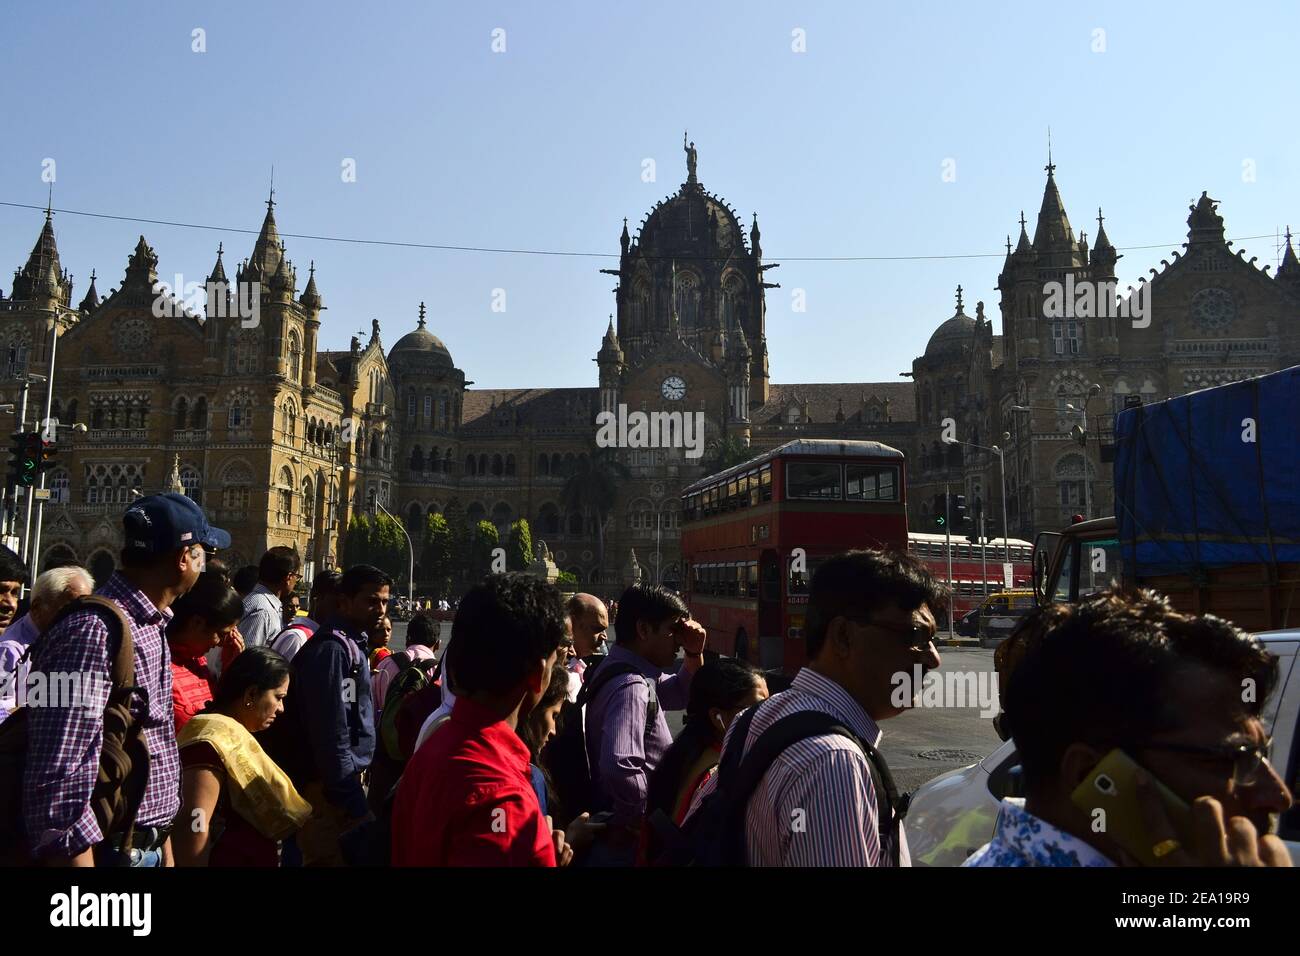 Mumbai, India - January, 2017: Crowd of people crossing street on background of Chhatrapati Shivaji Terminus railway station (Victoria Terminus) Stock Photo